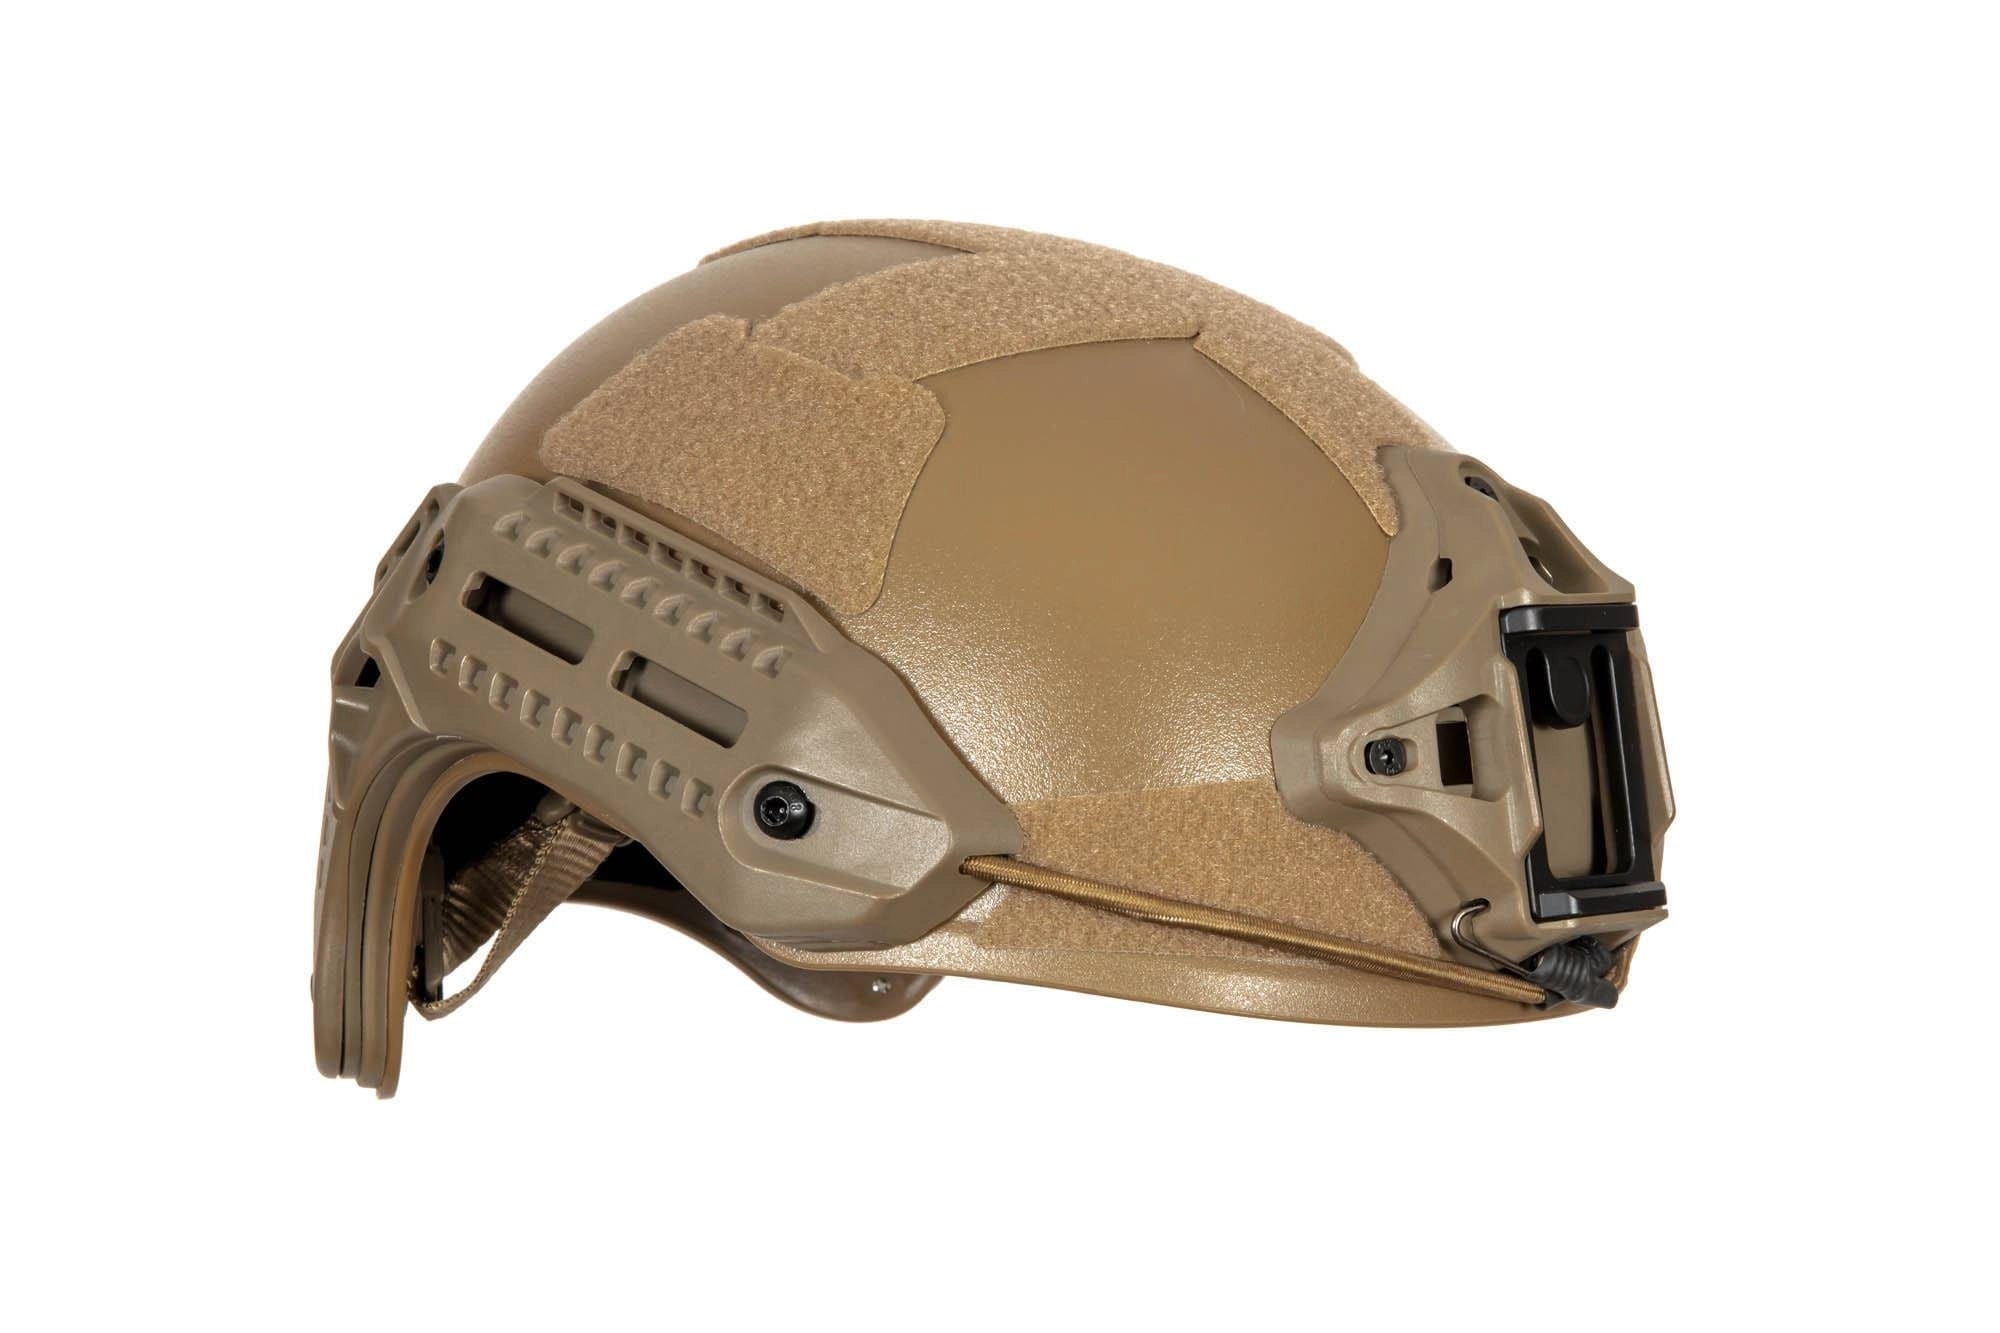 MK helmet replica - Tan